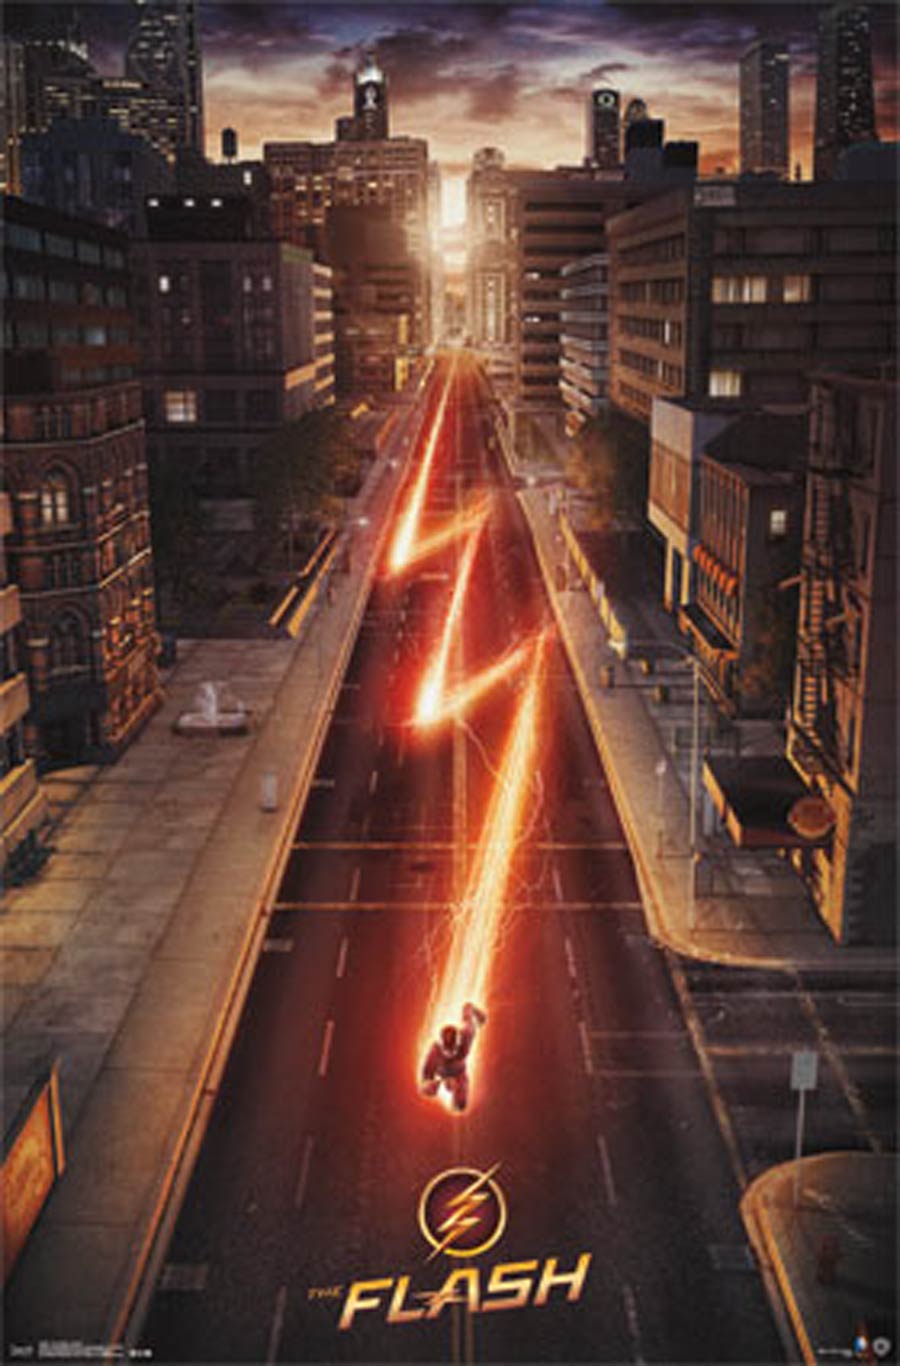 Flash TV Street Poster